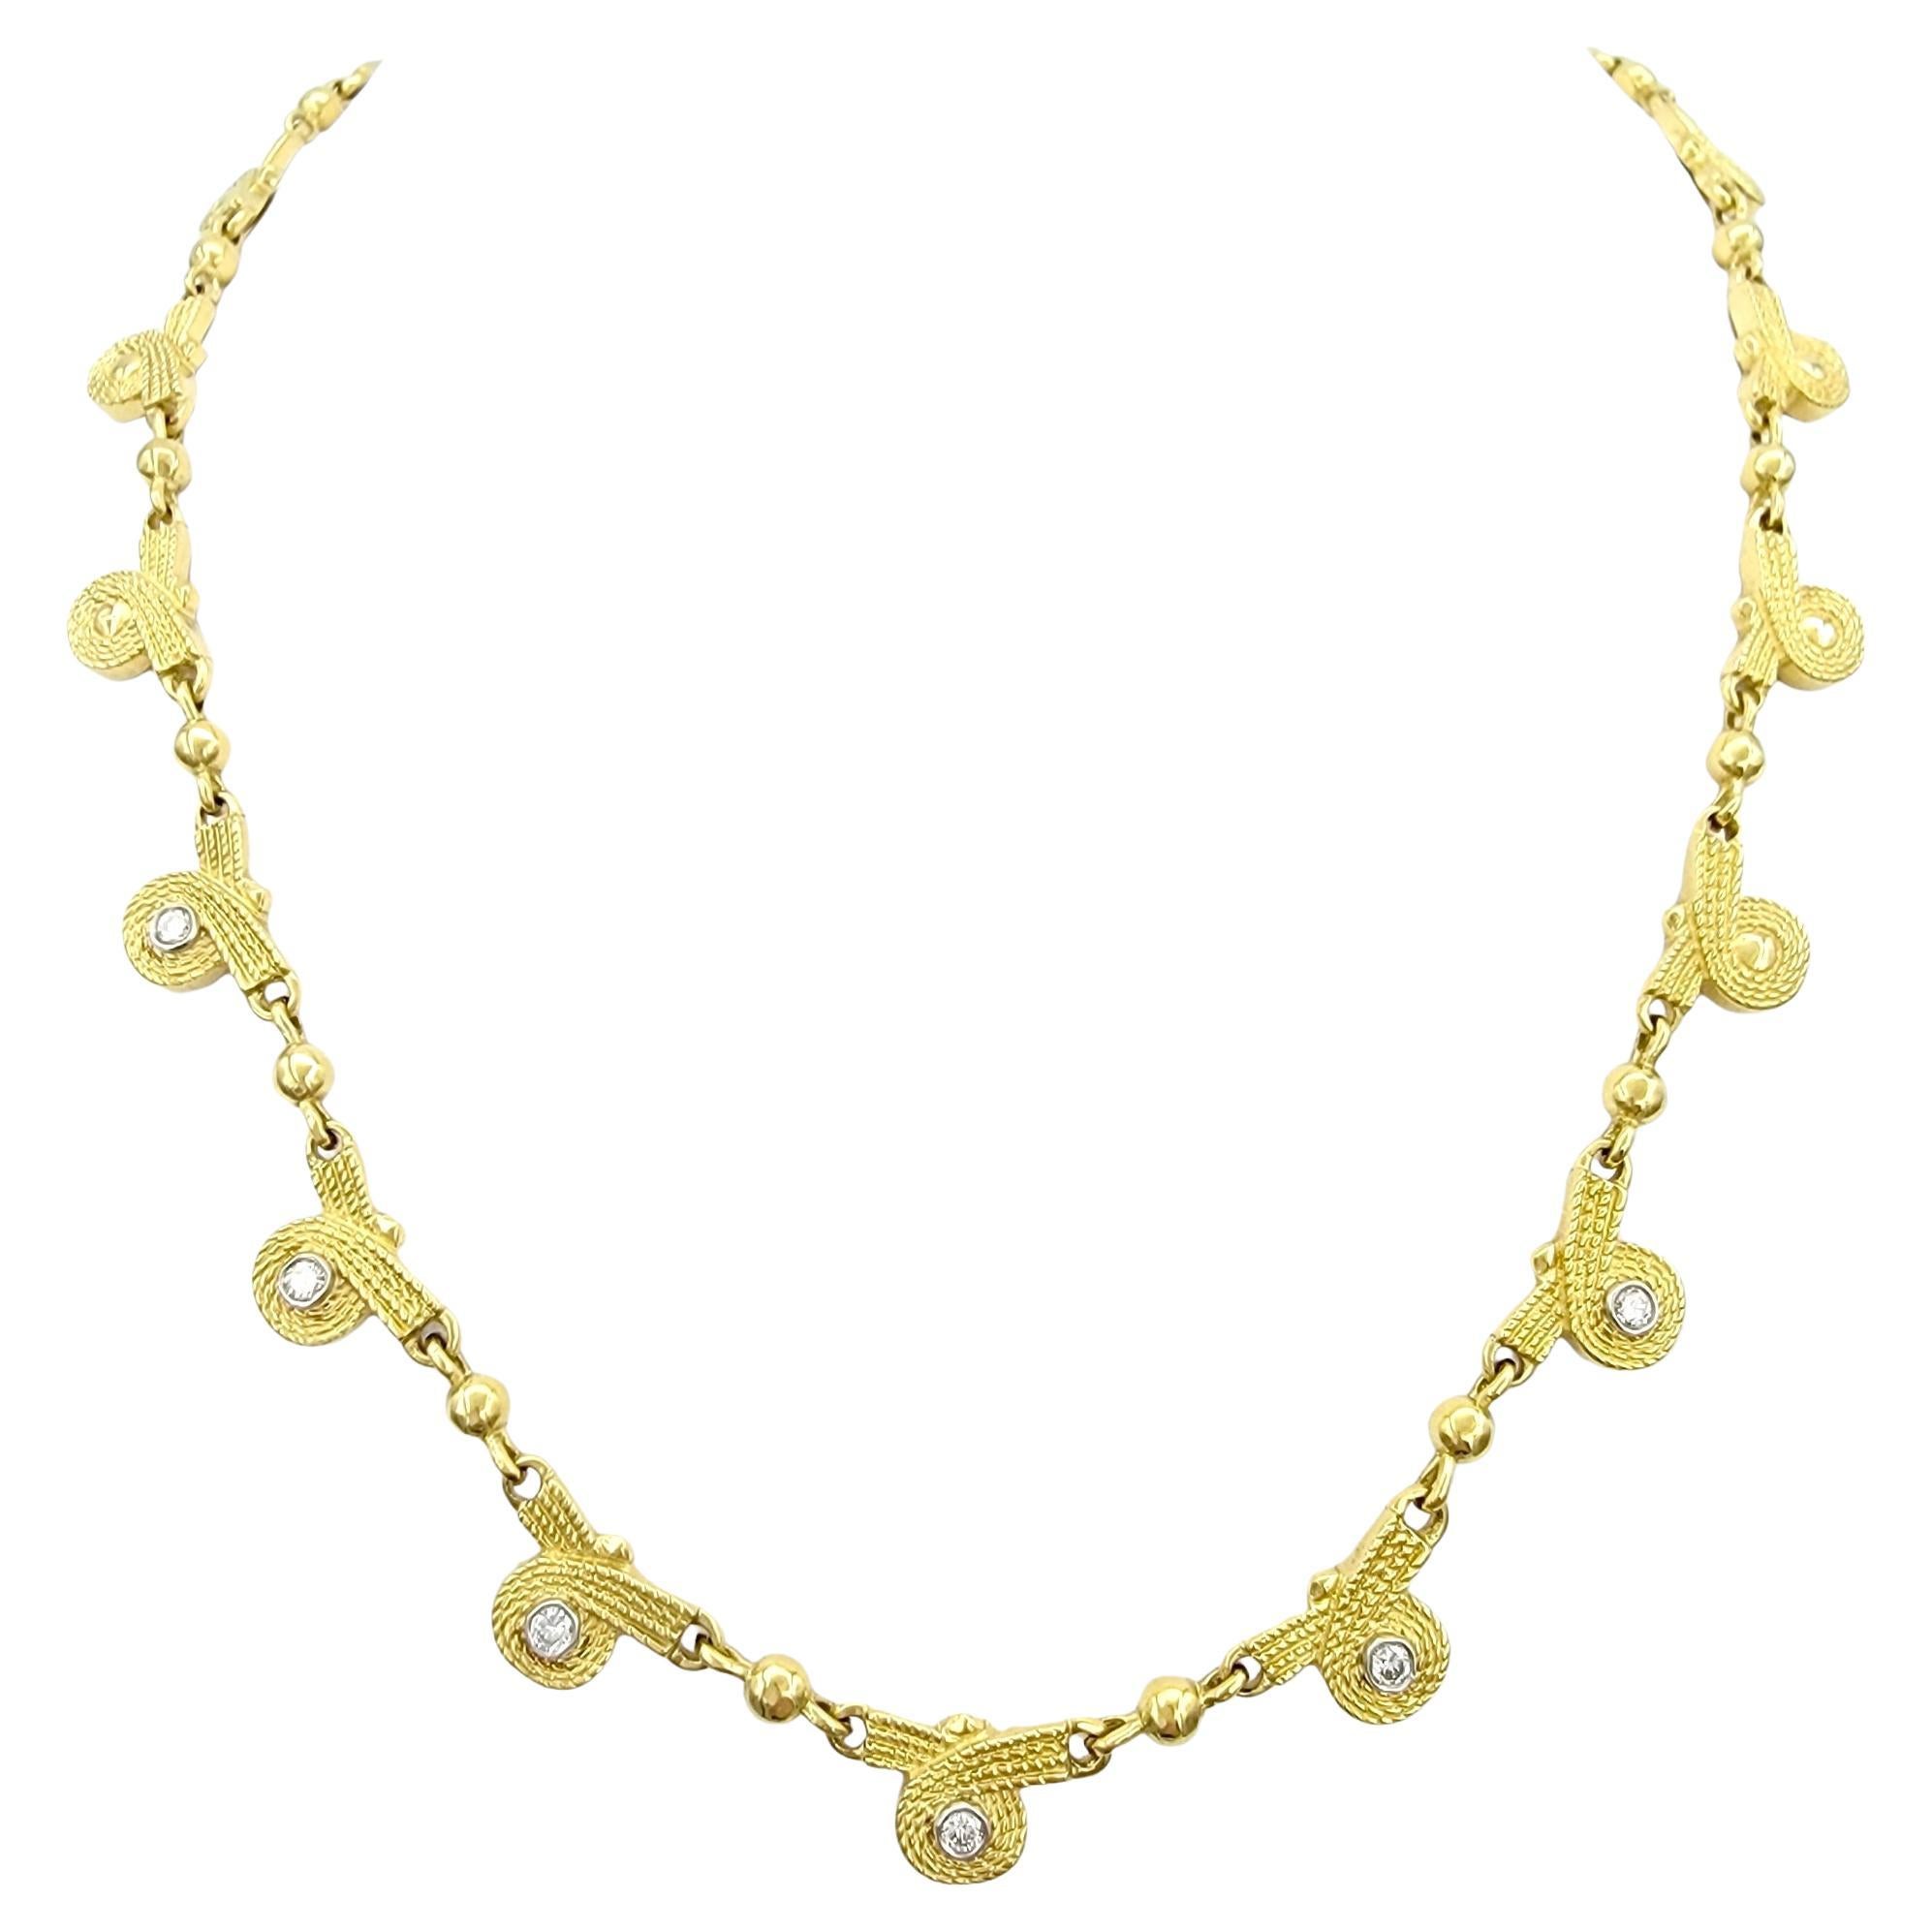 J.J. Marco 'Illuminated Braids' 18 Karat Yellow Gold Link Necklace with Diamonds For Sale